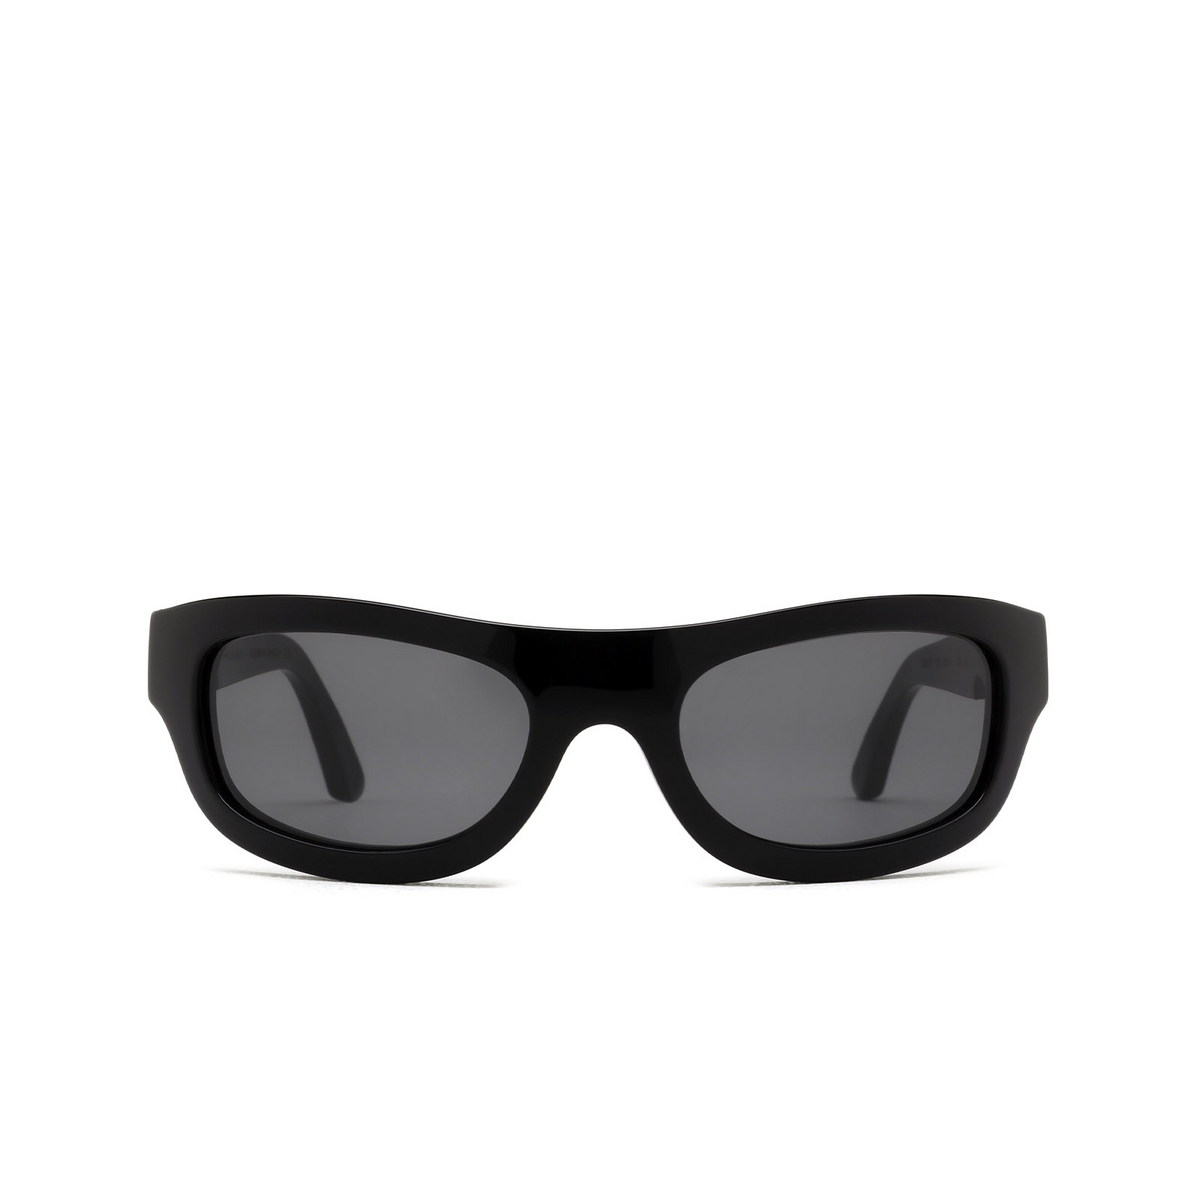 Huma® Rectangle Sunglasses: Ali color Black 06 - front view.